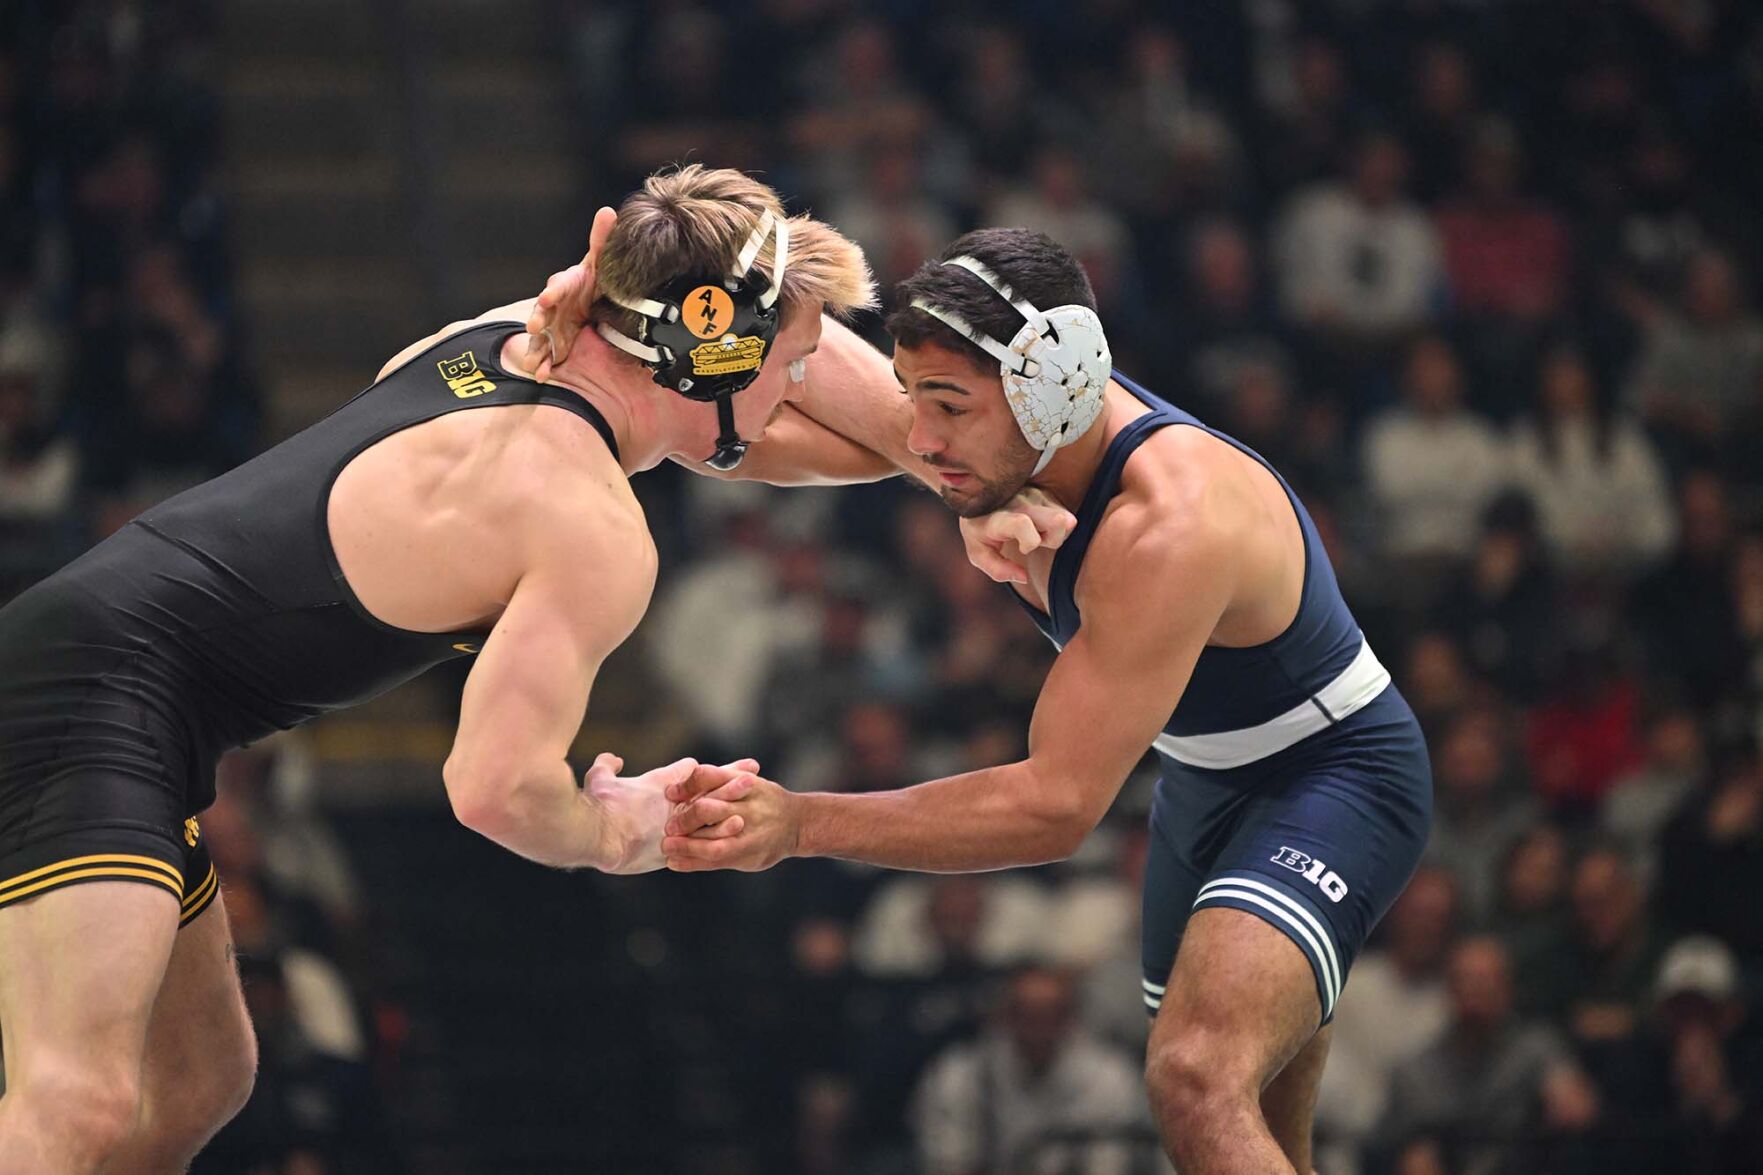 NCAA wrestling Iowas Murin advances to quarterfinals, will face three-time champion Sports tribdem pic